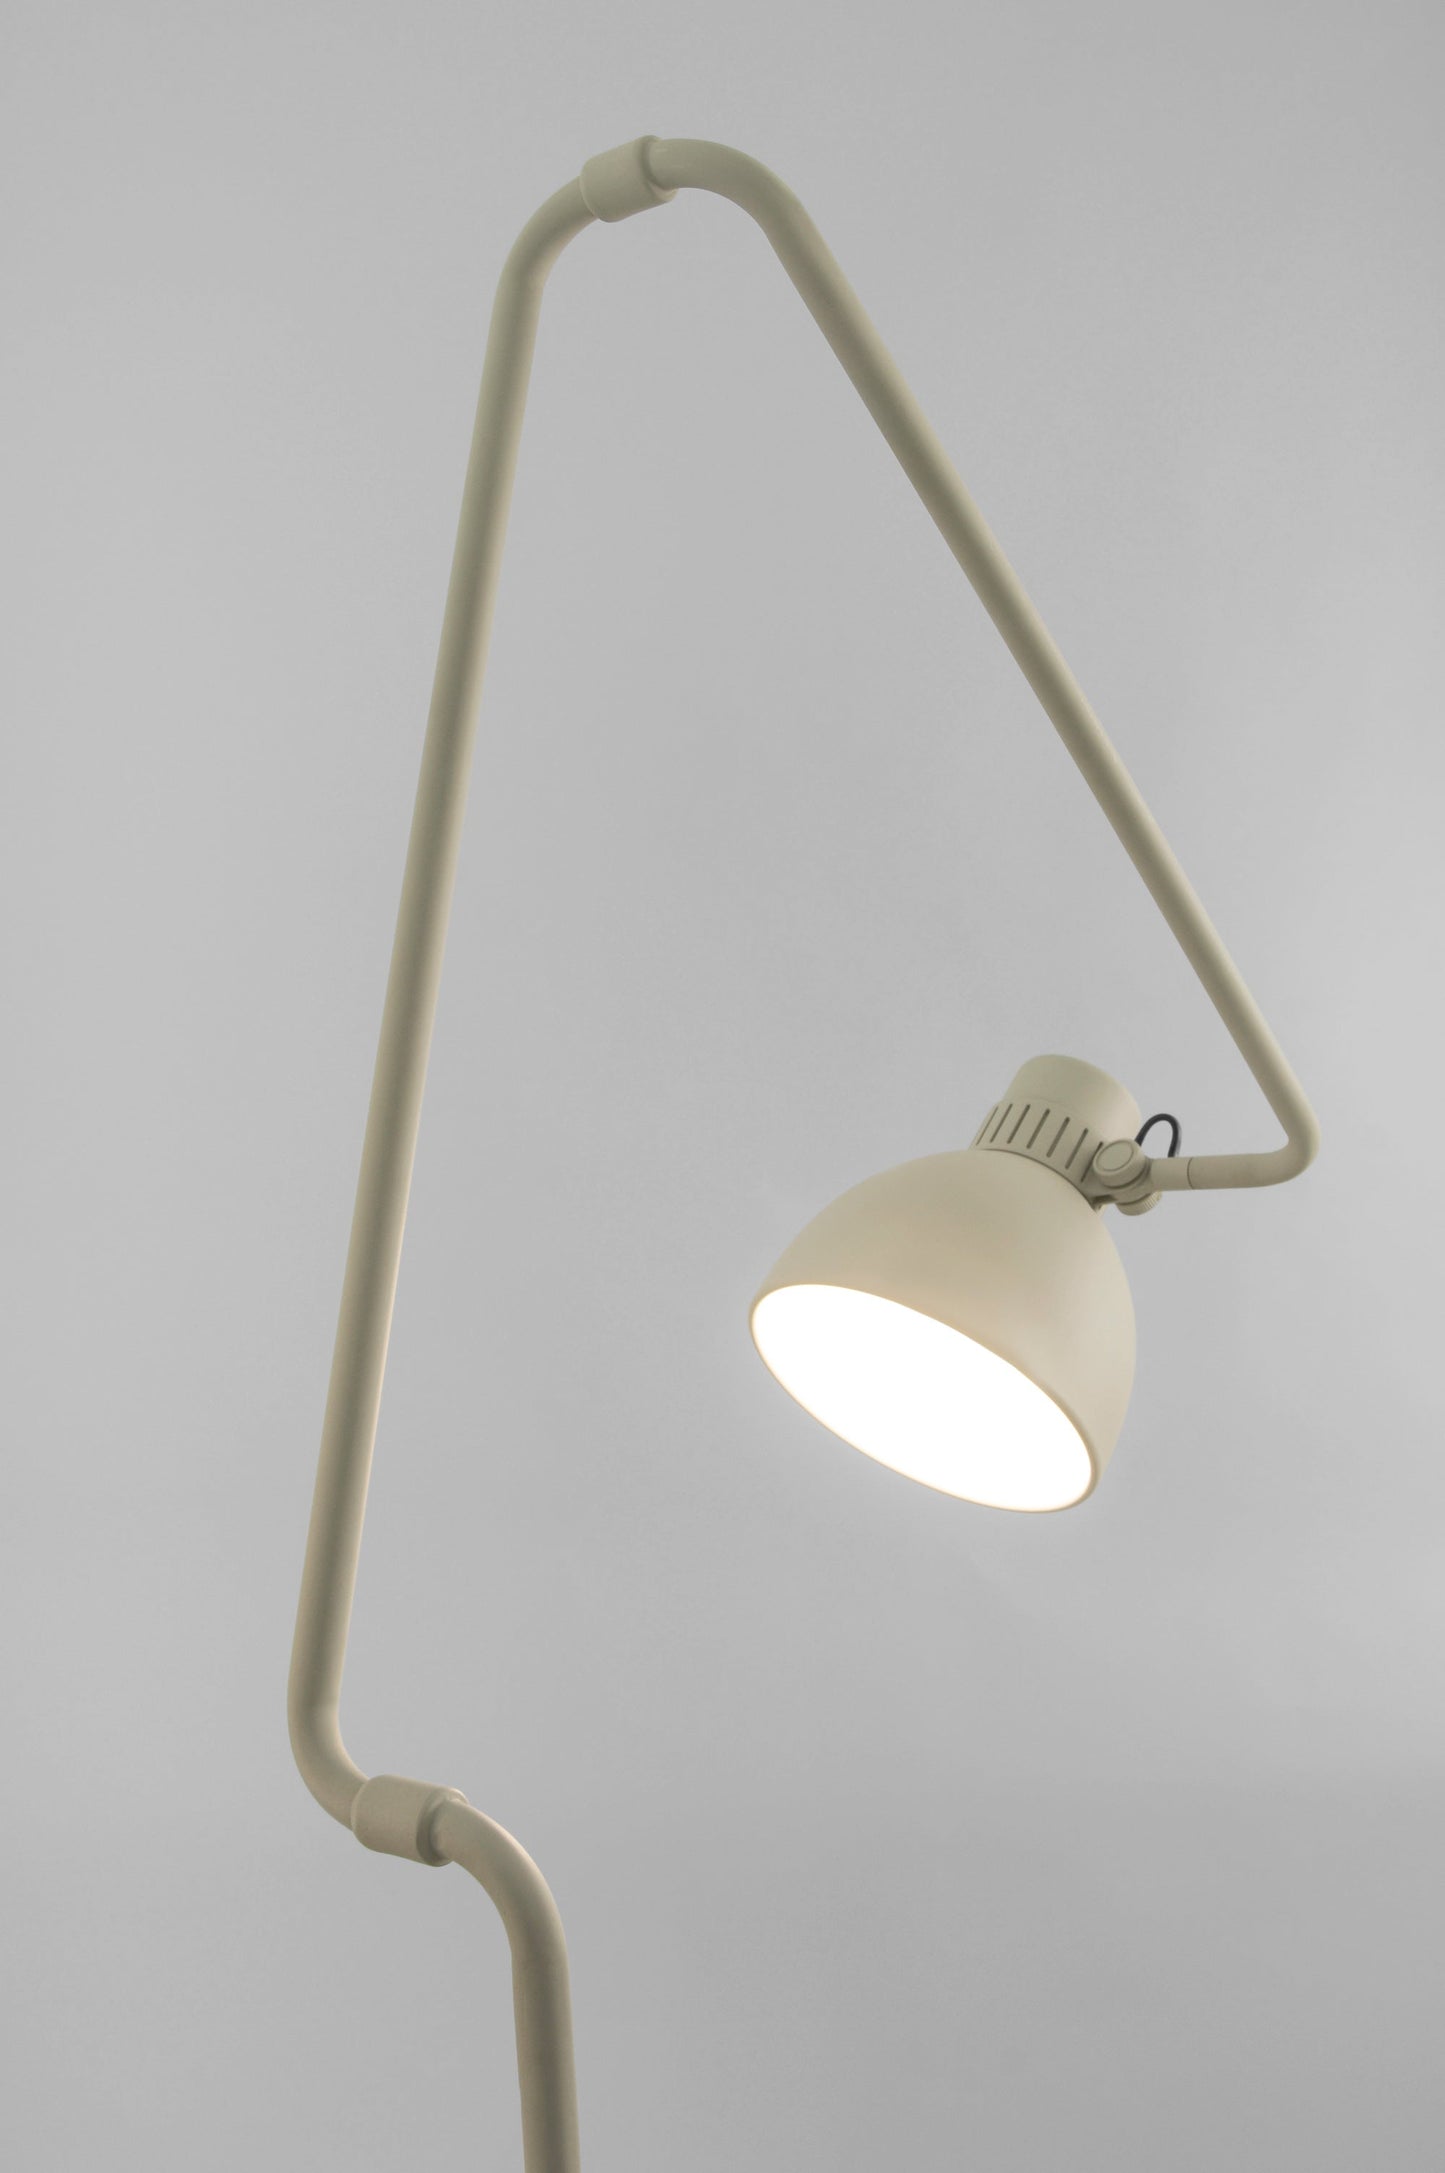 B.Lux System F50 Floor Lamp